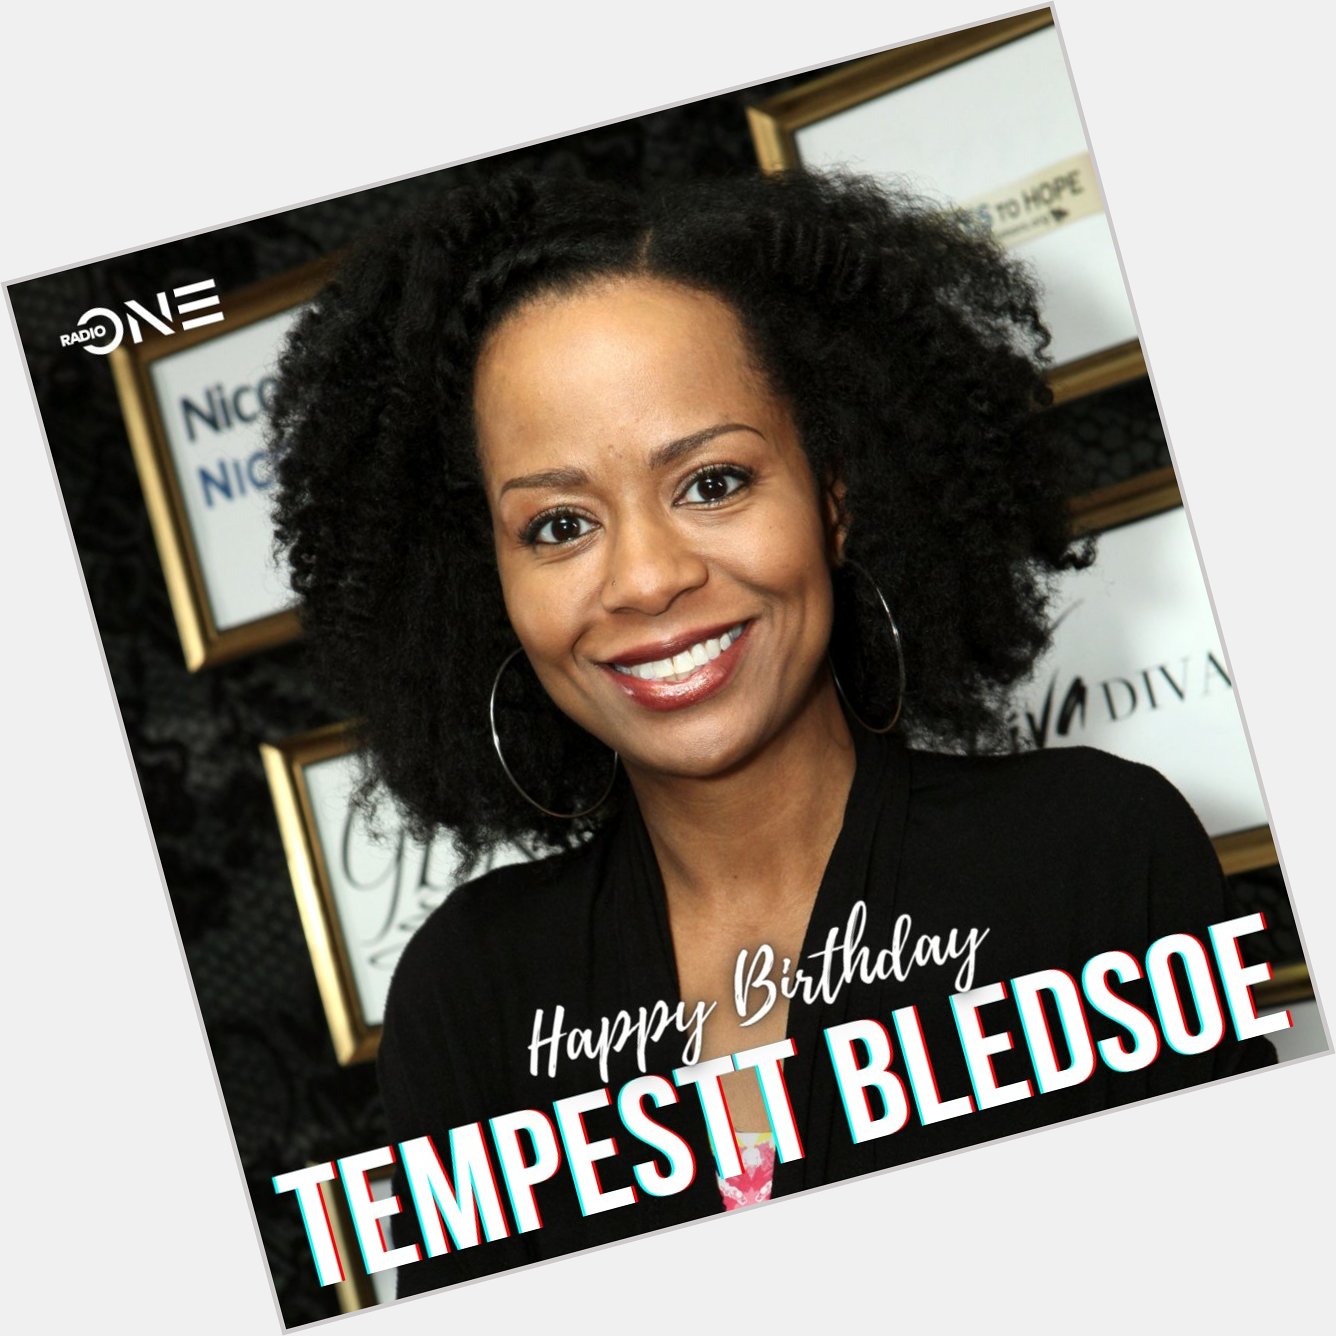 Wishing Tempestt Bledsoe a very happy birthday 